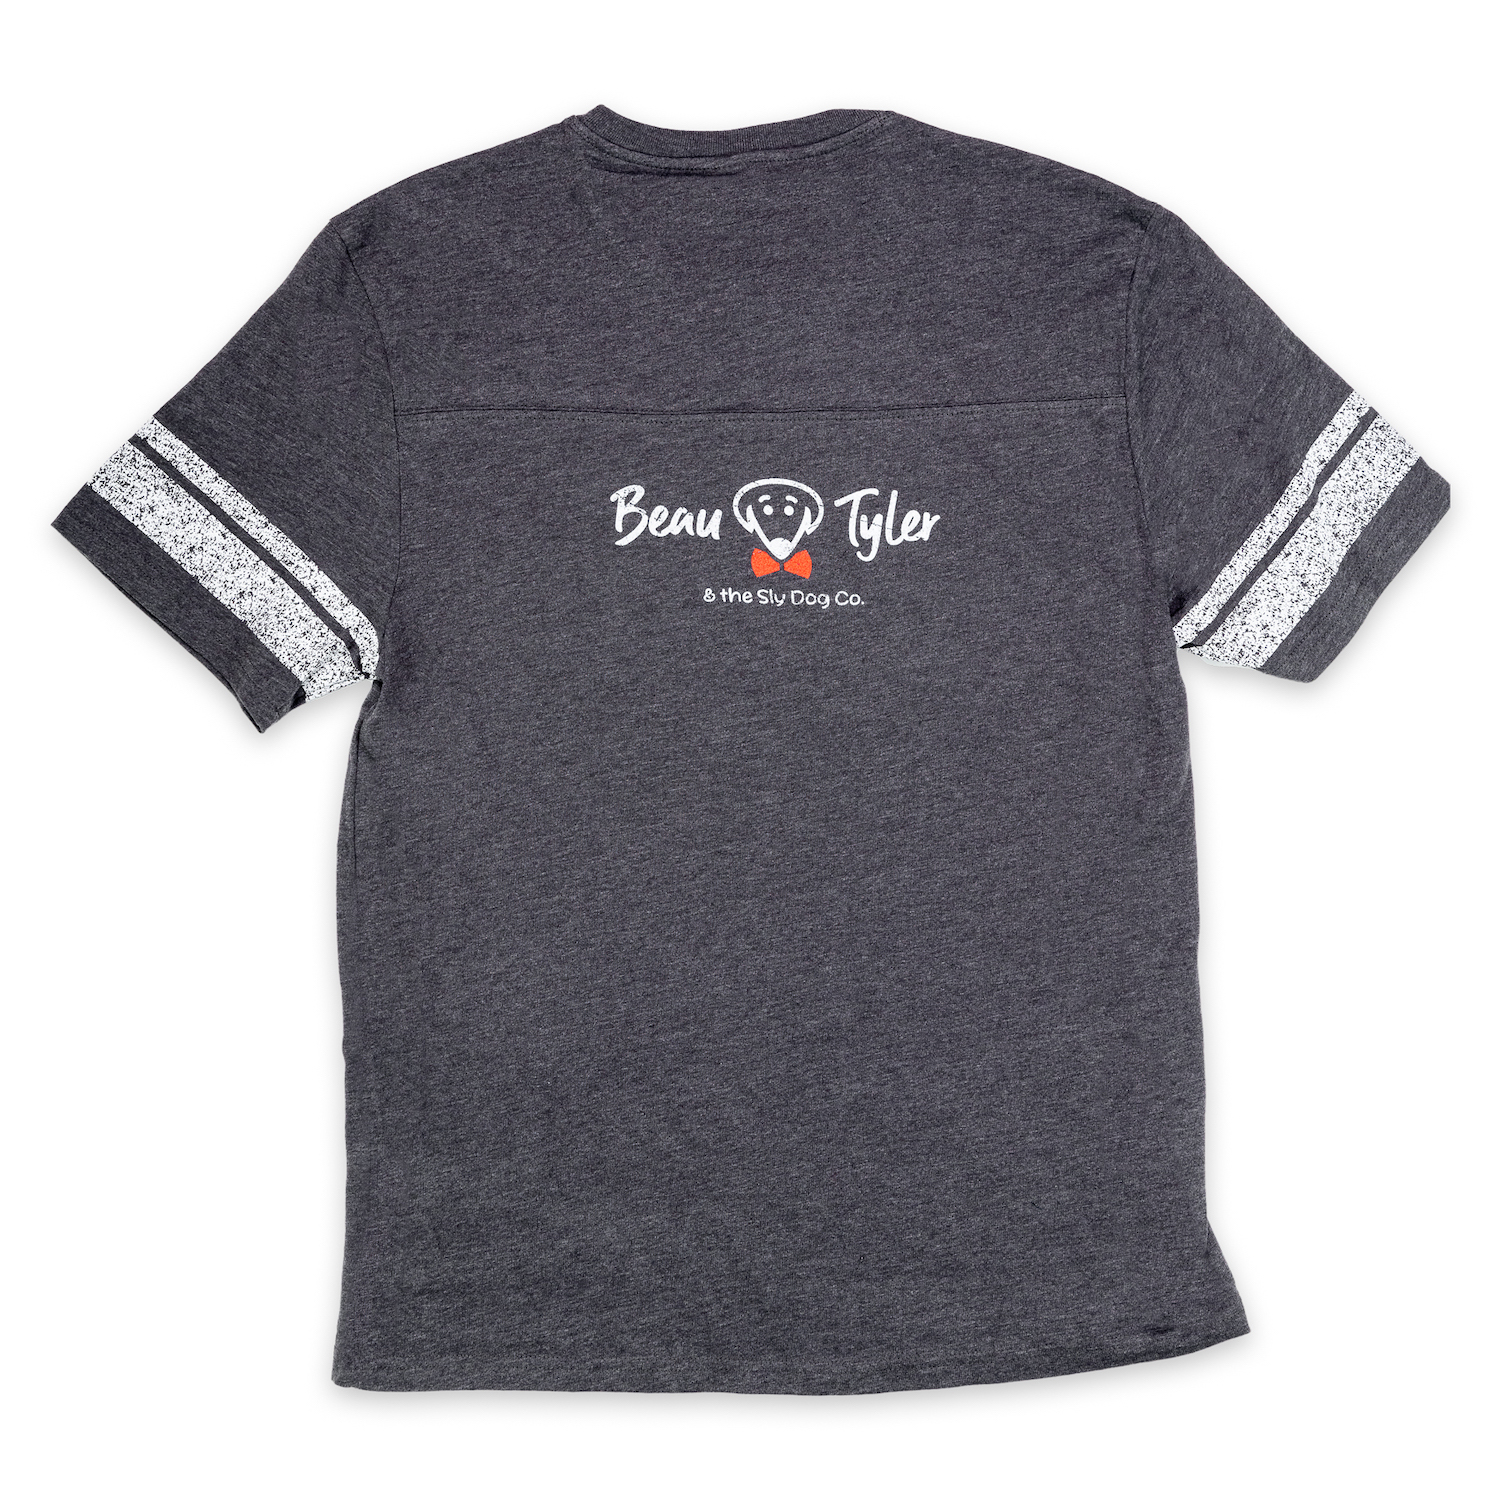 Beau Tyler - Thunderbird shirt back gray